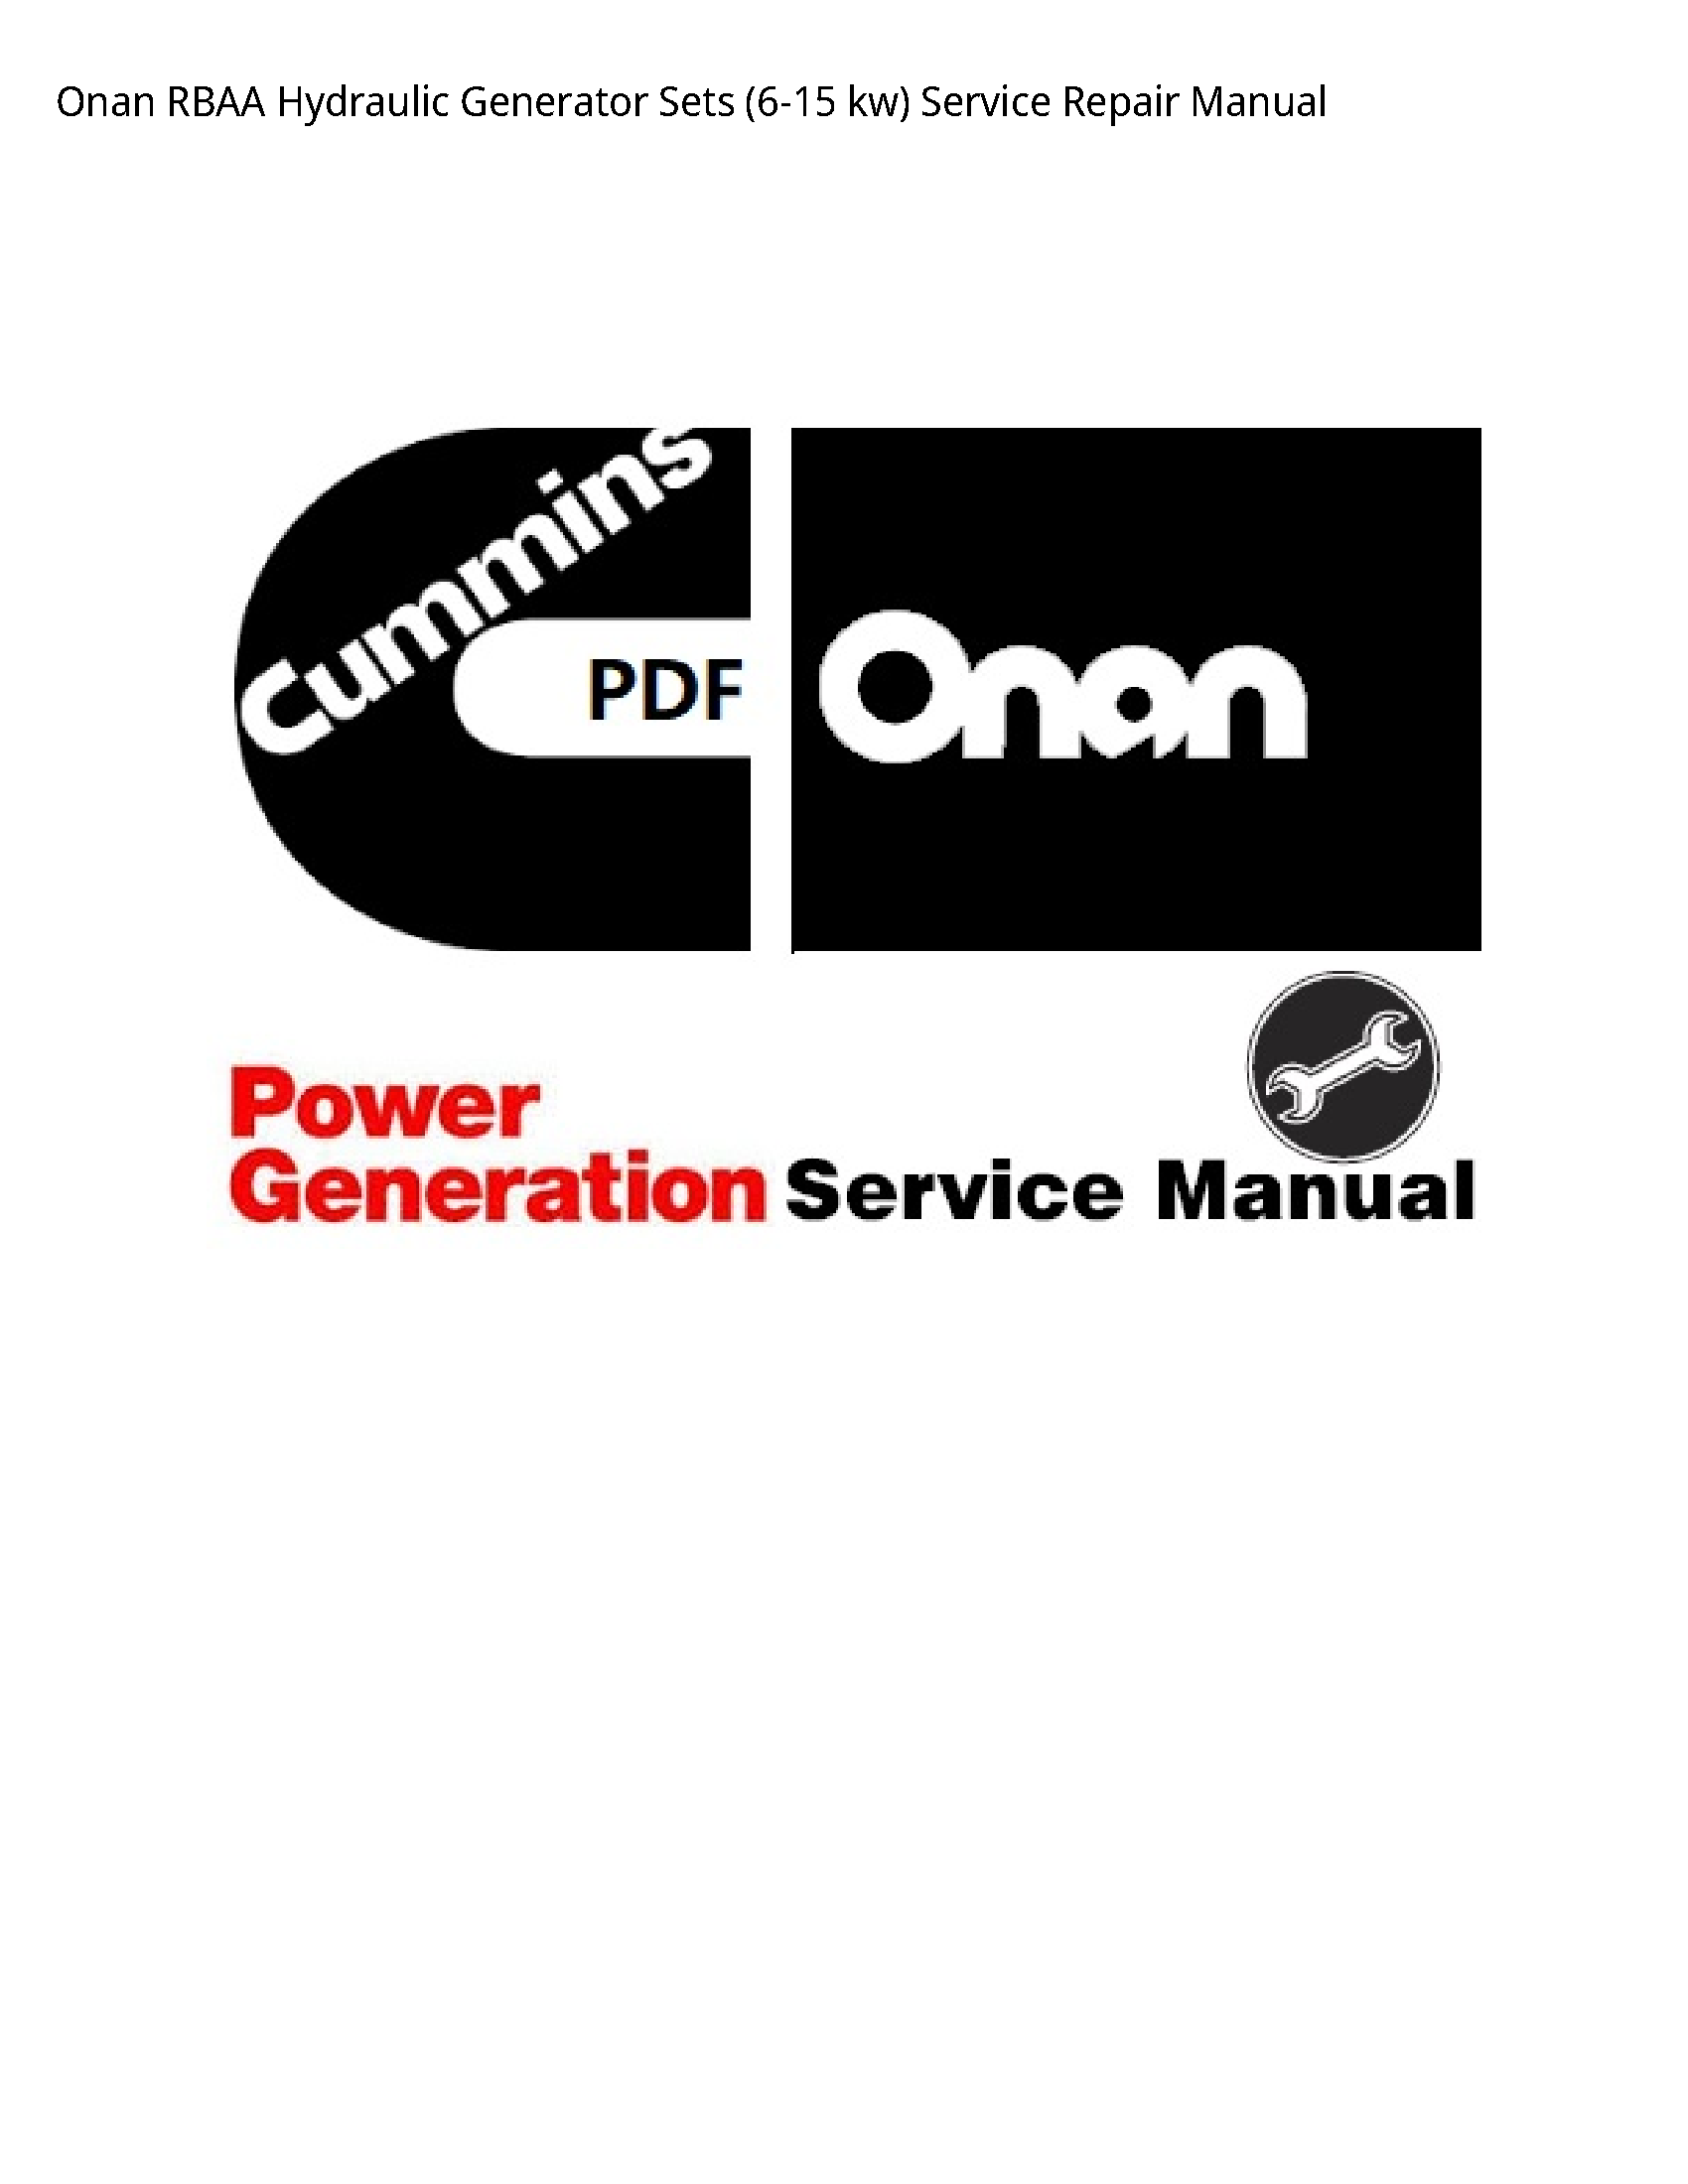 Onan (6-15 RBAA Hydraulic Generator Sets kw) manual